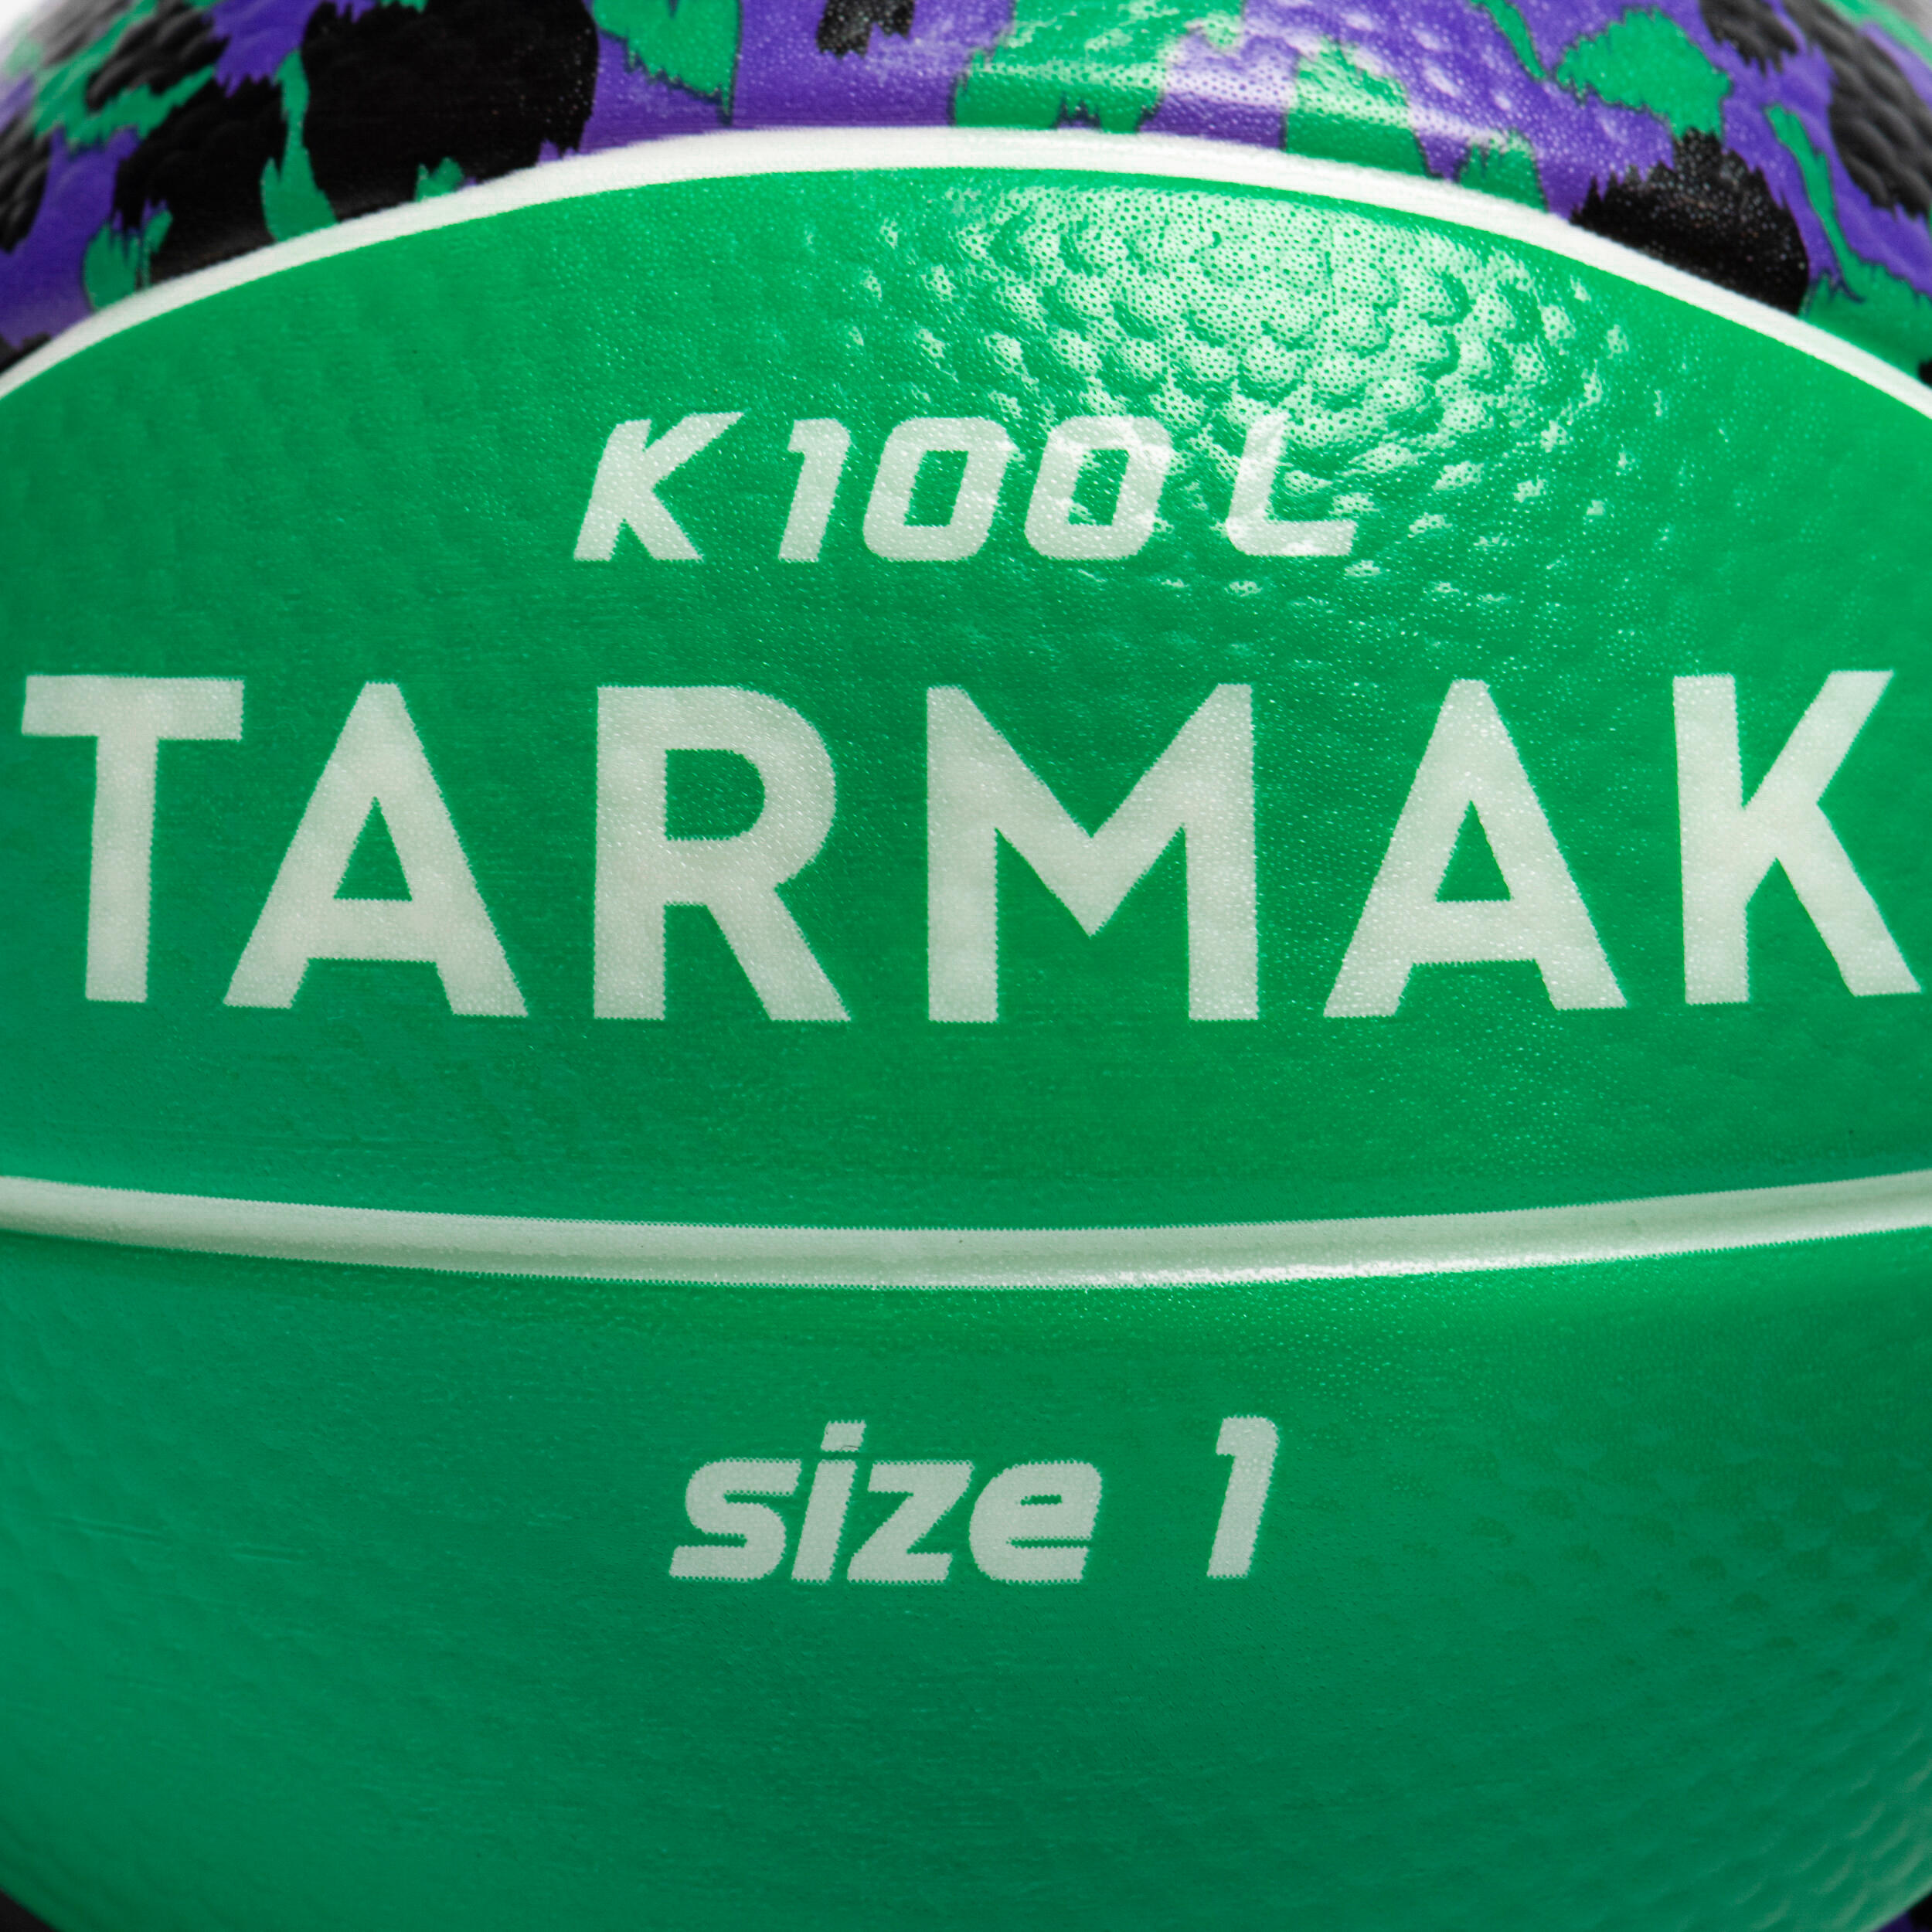 Kids' Mini Foam Basketball Size 1 K100 - Green/Black 5/5